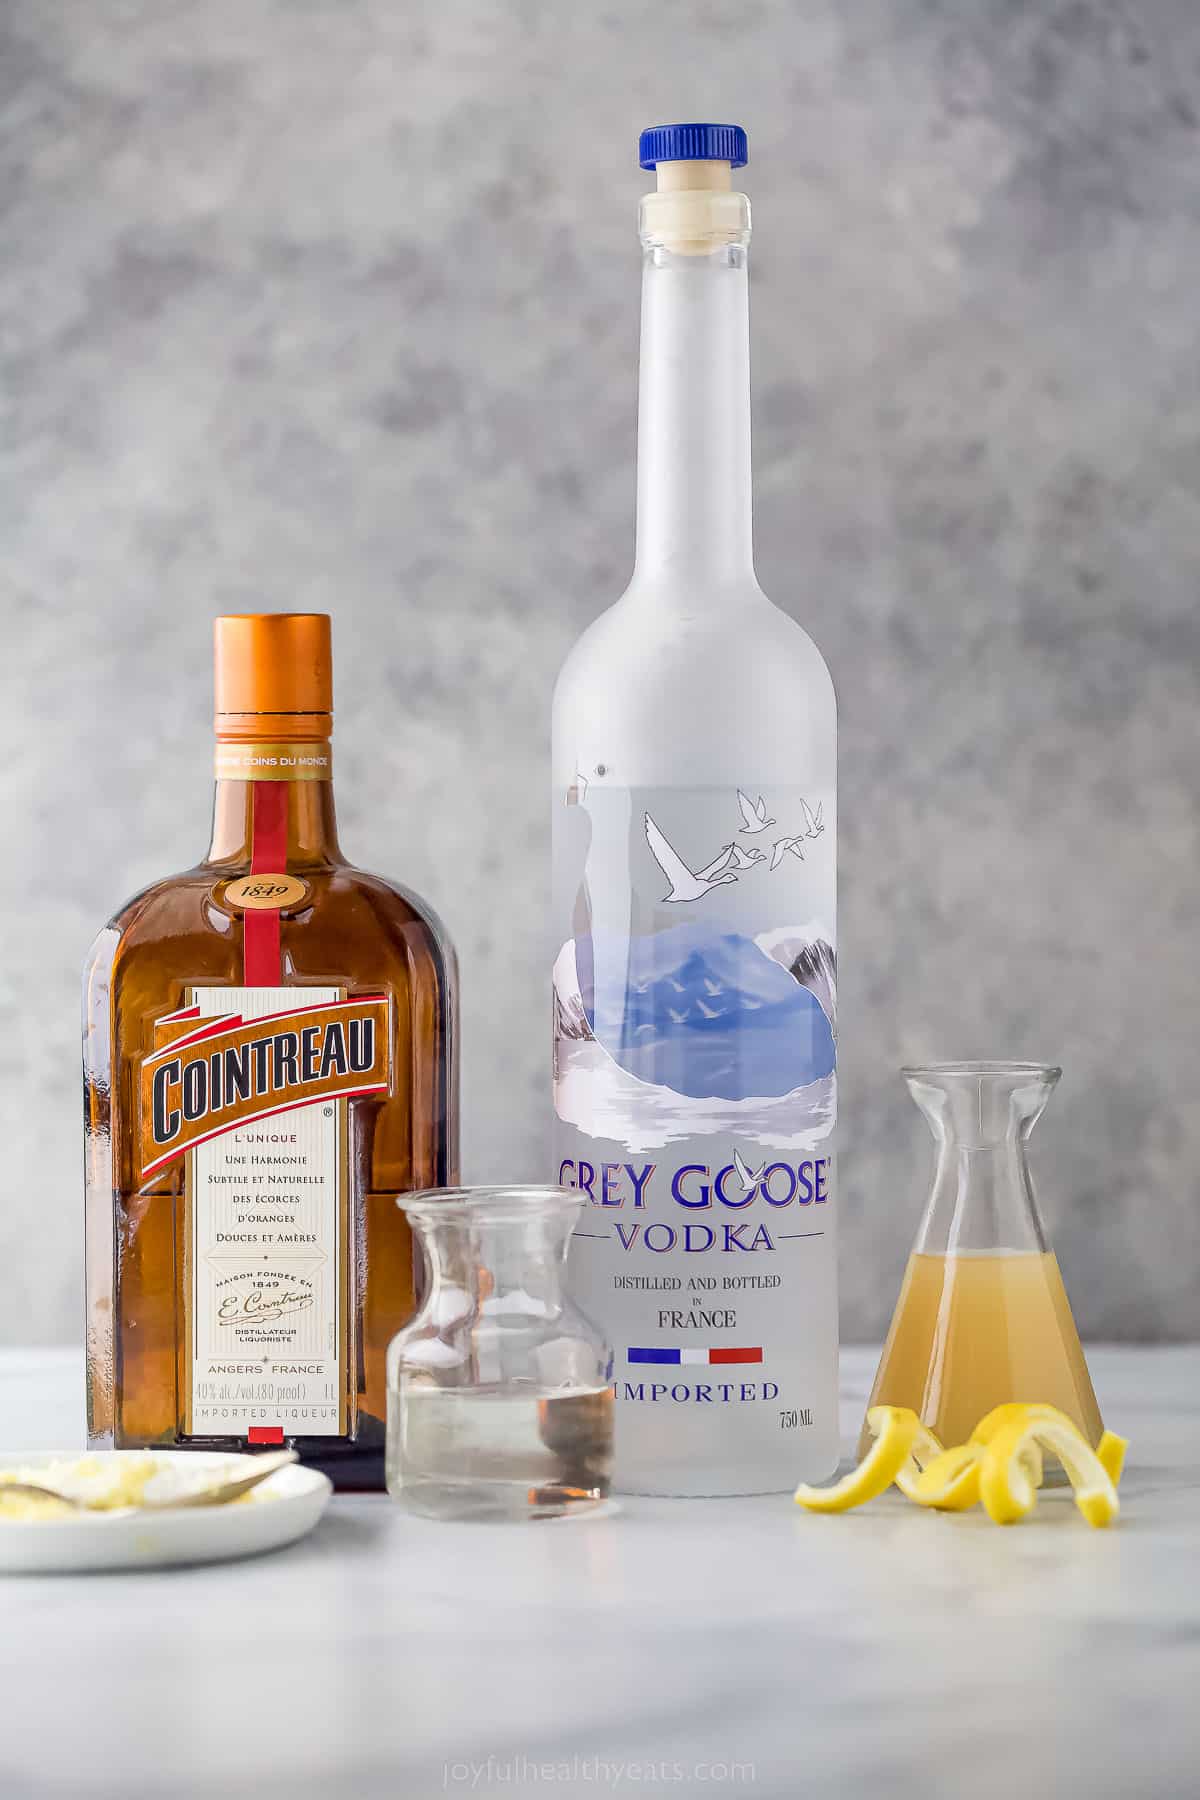 Bar ingredients to make a lemon drop martini including vodka, lemon juice, lemon peels, and Cointreau